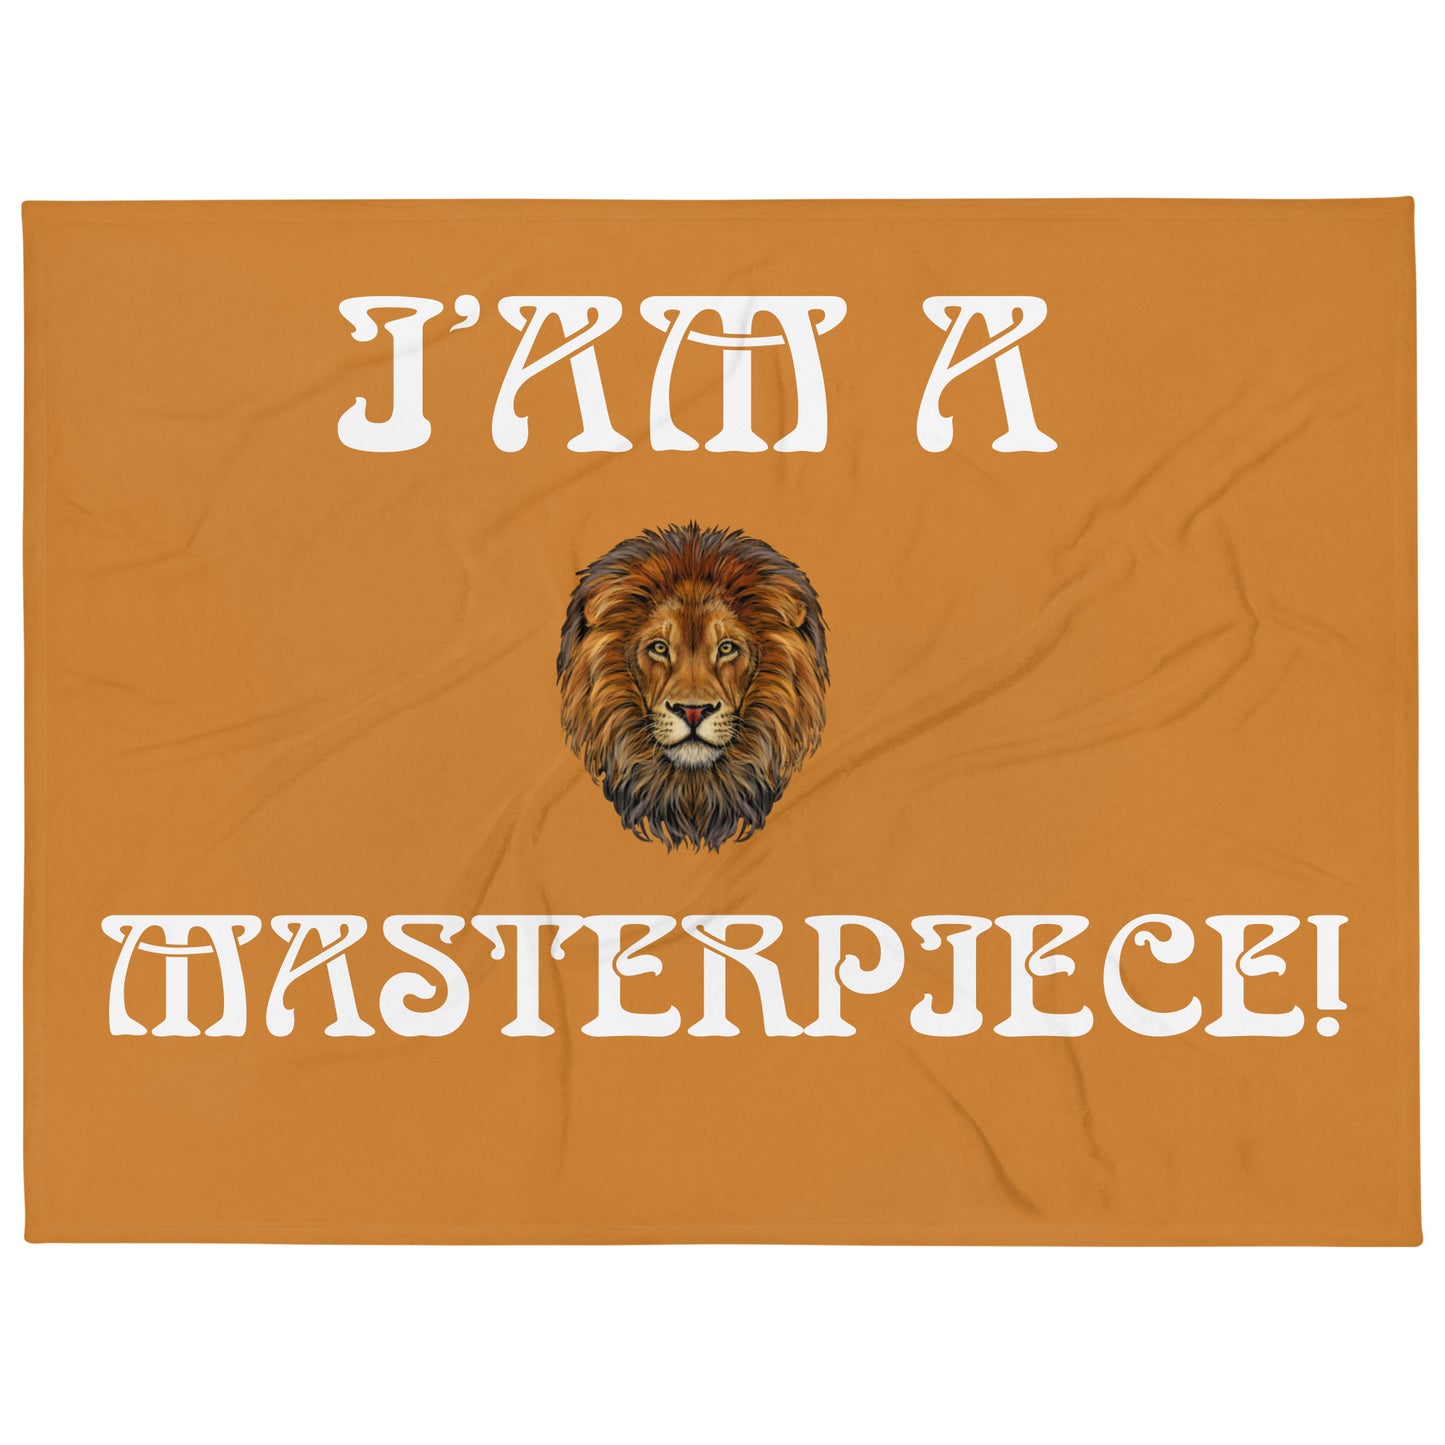 “I’AM A MASTERPIECE!”Bronze Throw Blanket W/White Font